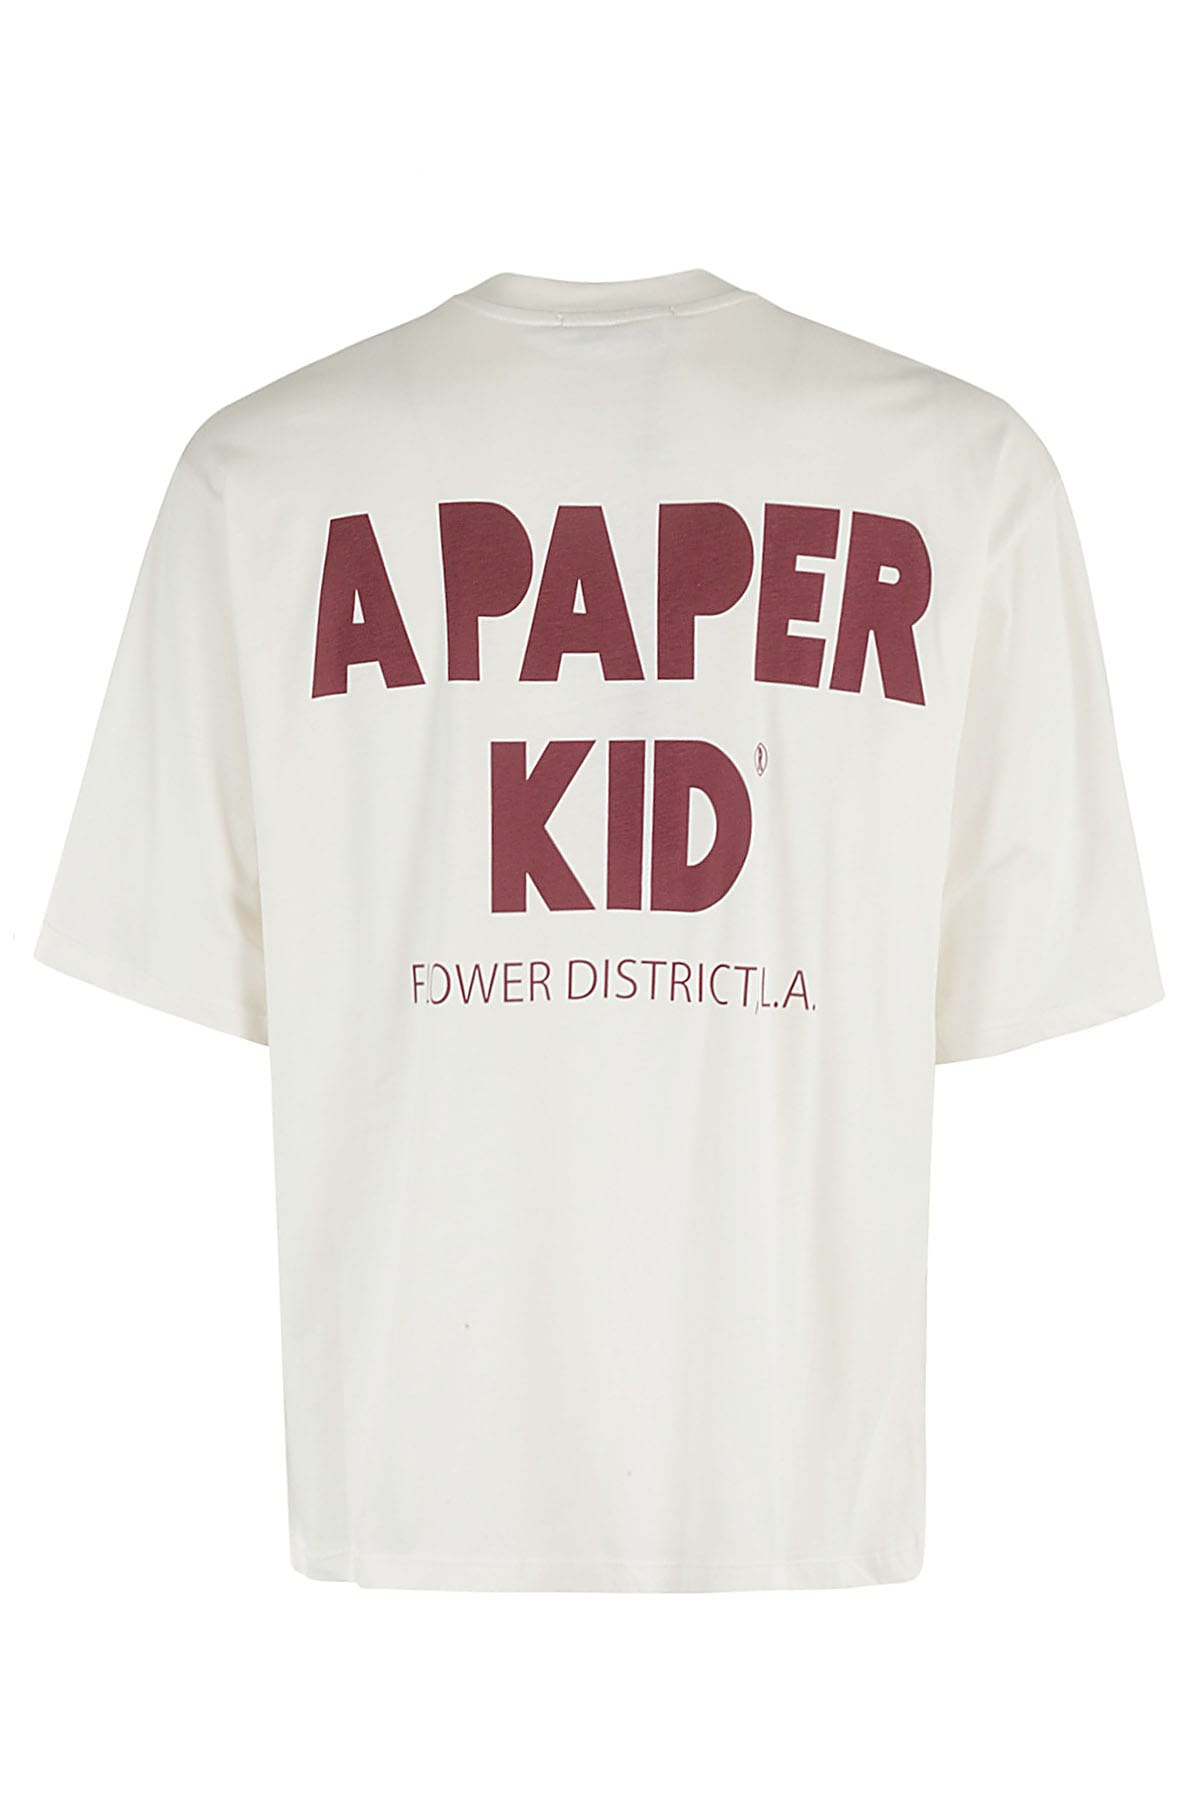 Shop A Paper Kid T Shirt In Crema